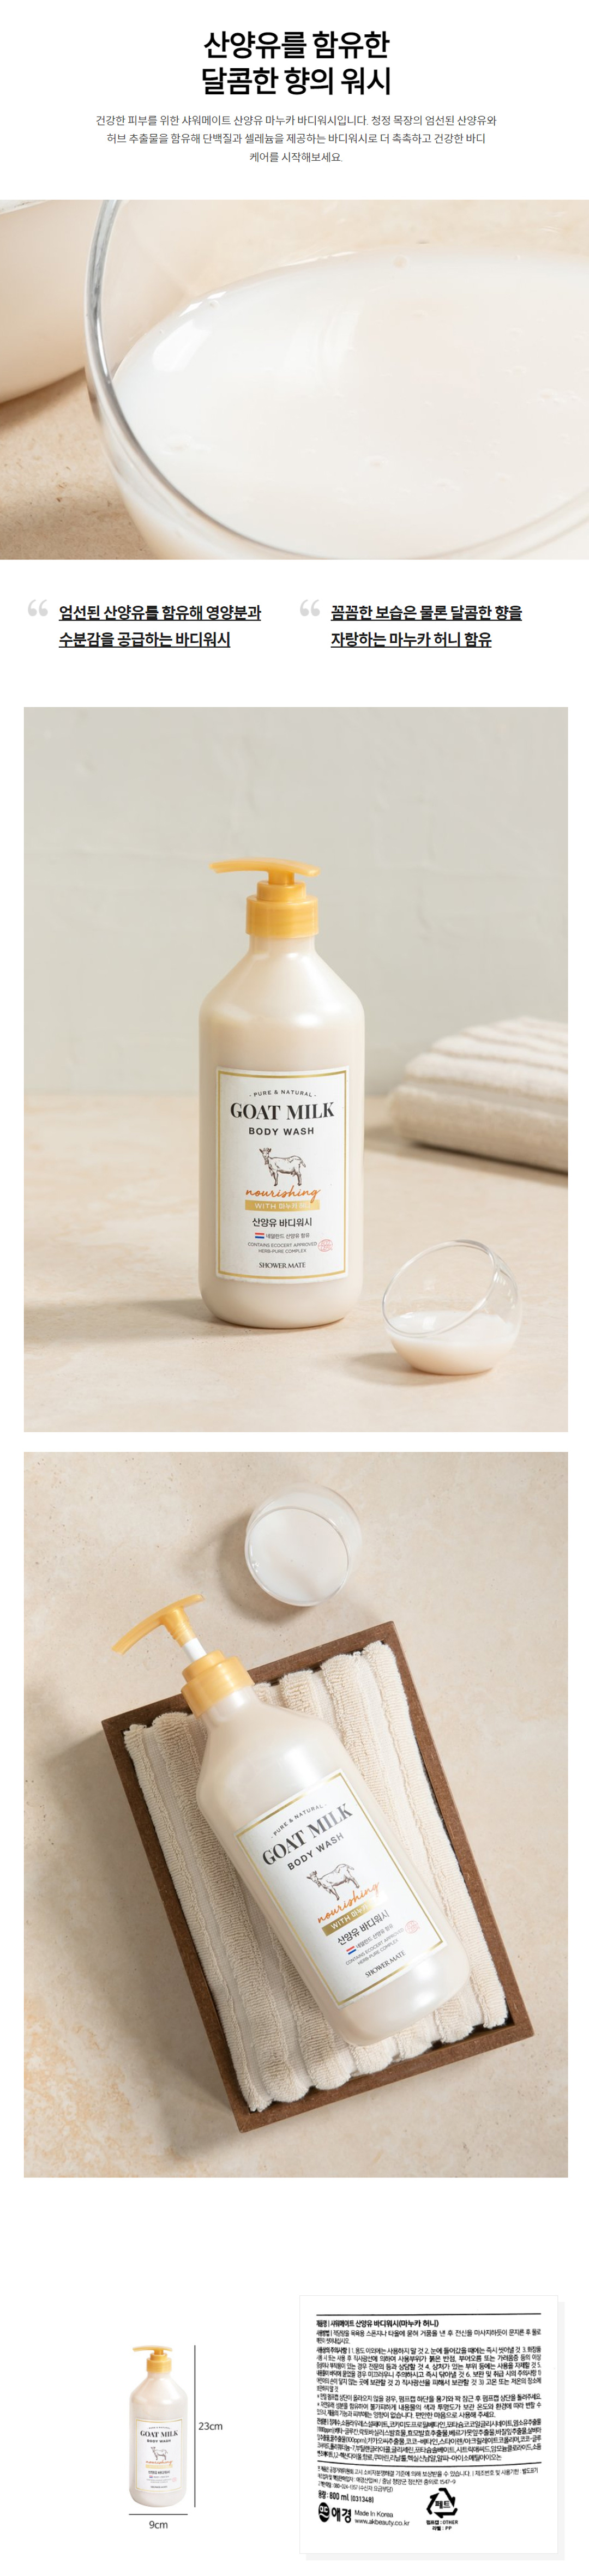 Shower Mate Original Goat Milk Body Wash